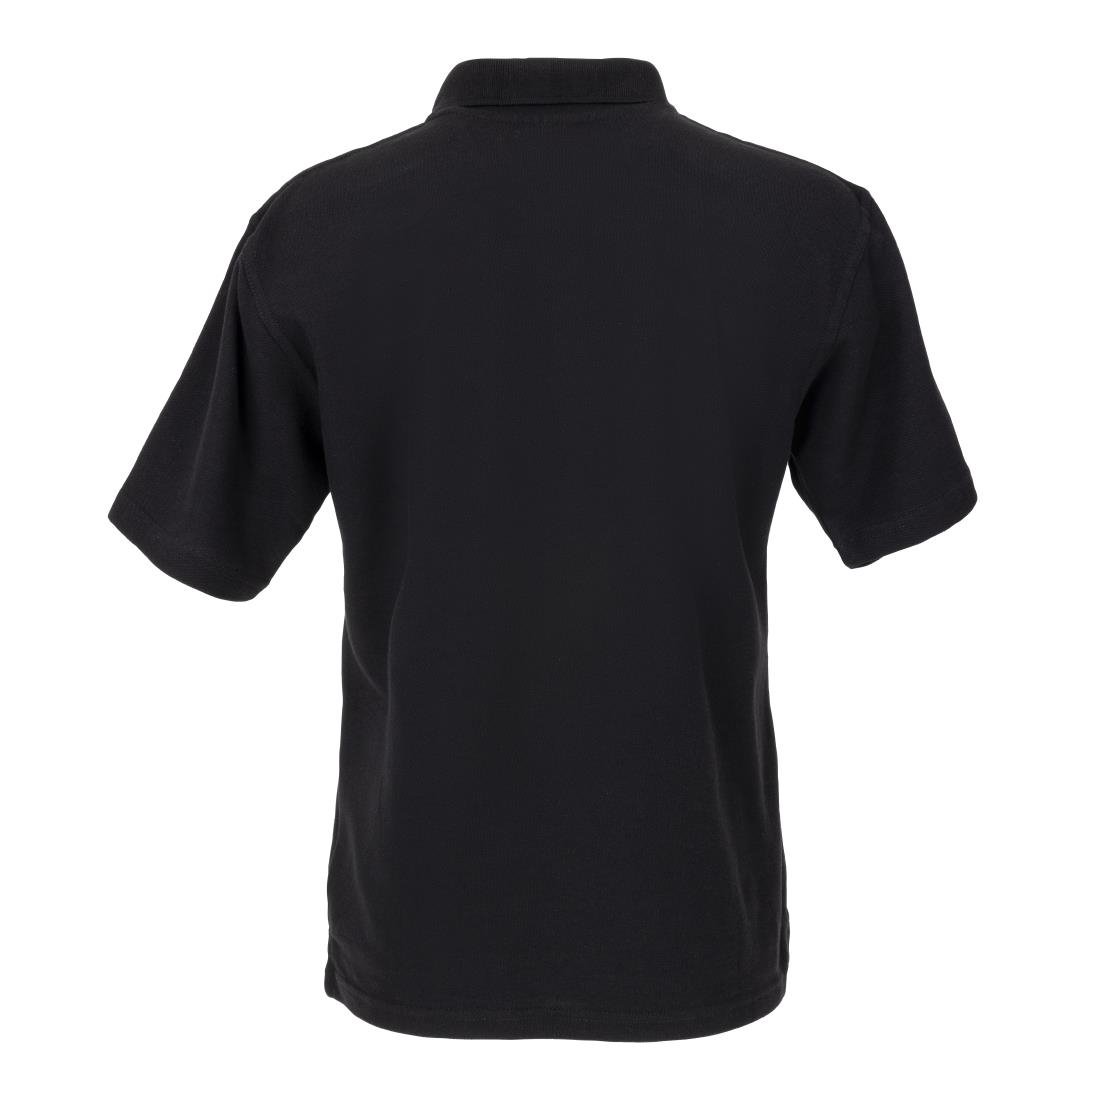 BB474-XXL Ladies Polo Shirt Black XXL